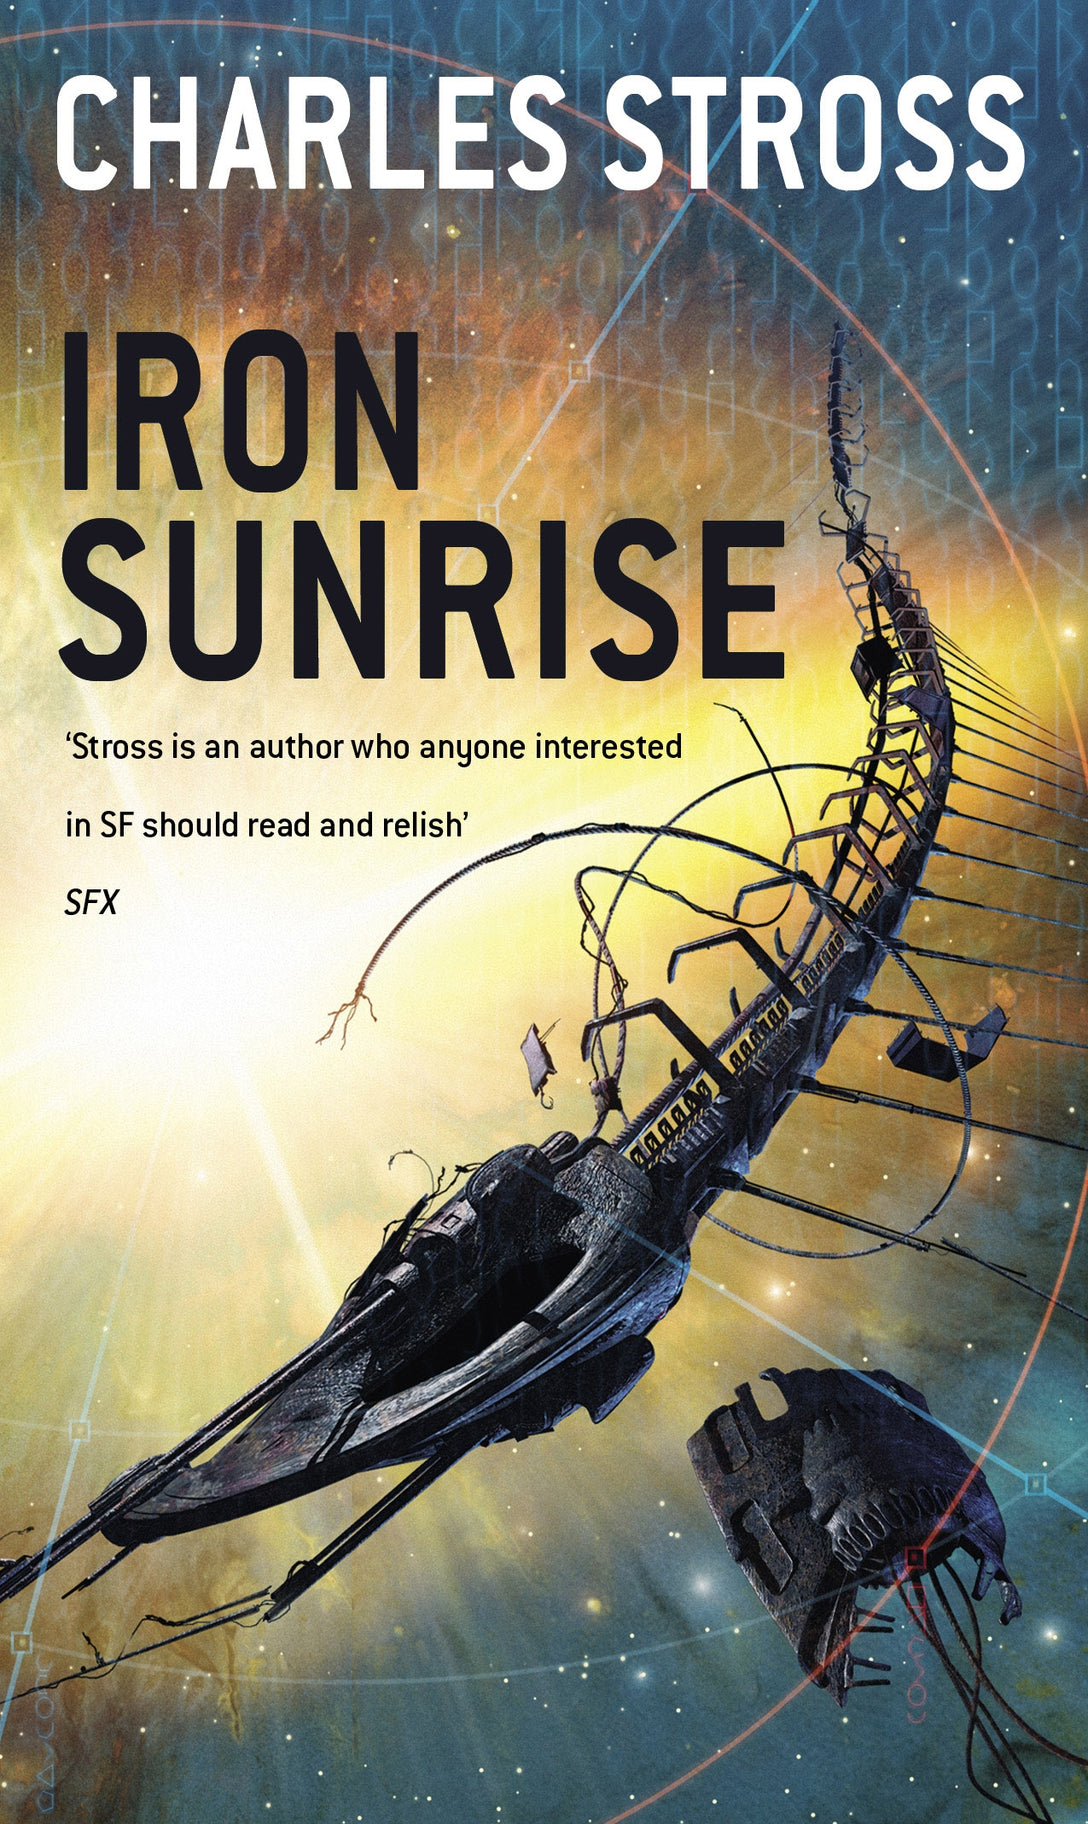 Iron Sunrise by Charles Stross